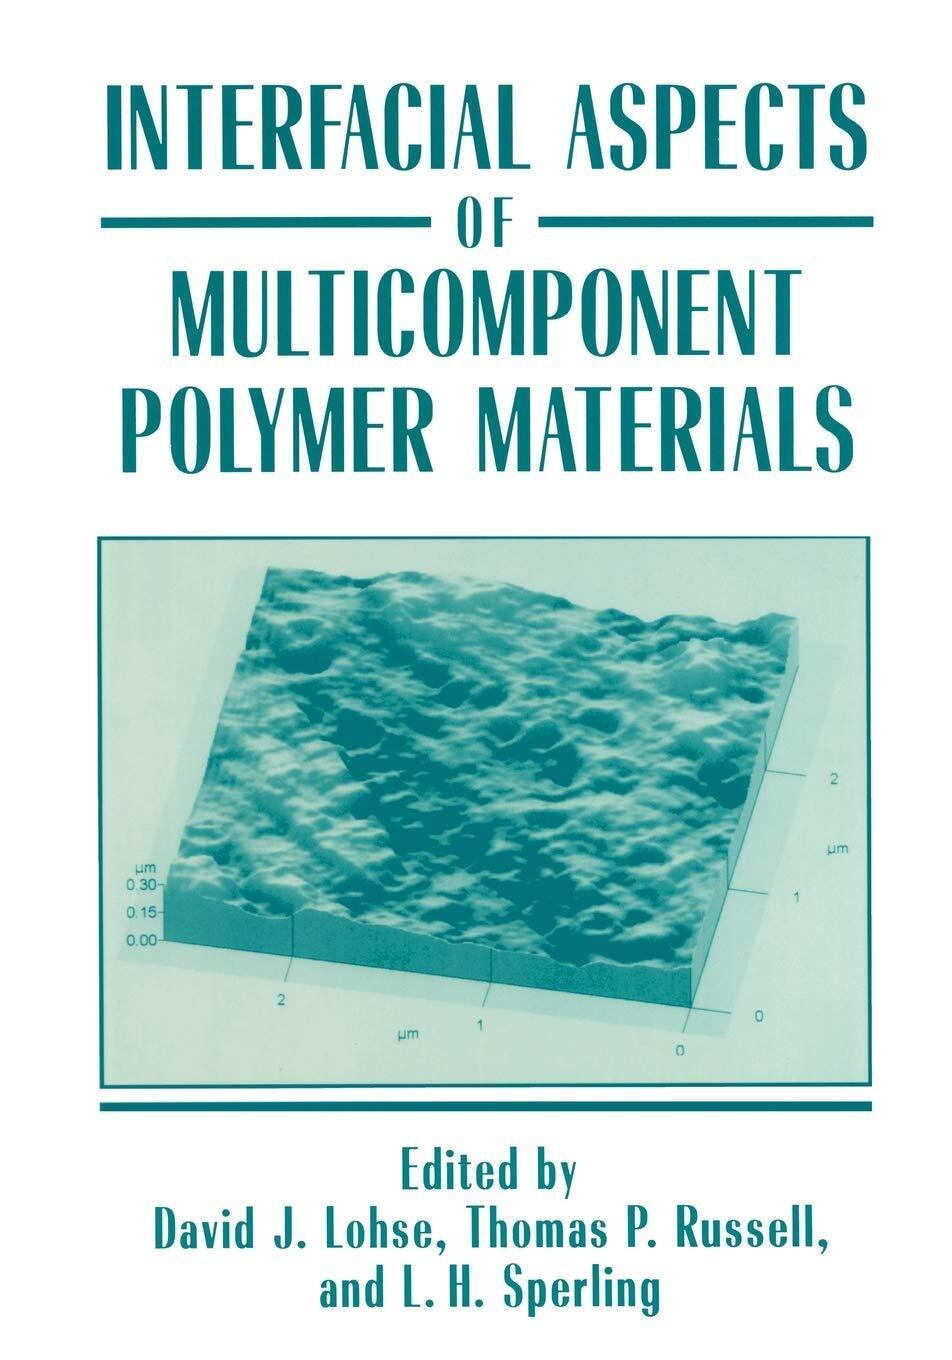 Interfacial Aspects of Multicomponent Polymer Materials - David J. Lohse - 2010 libro usato